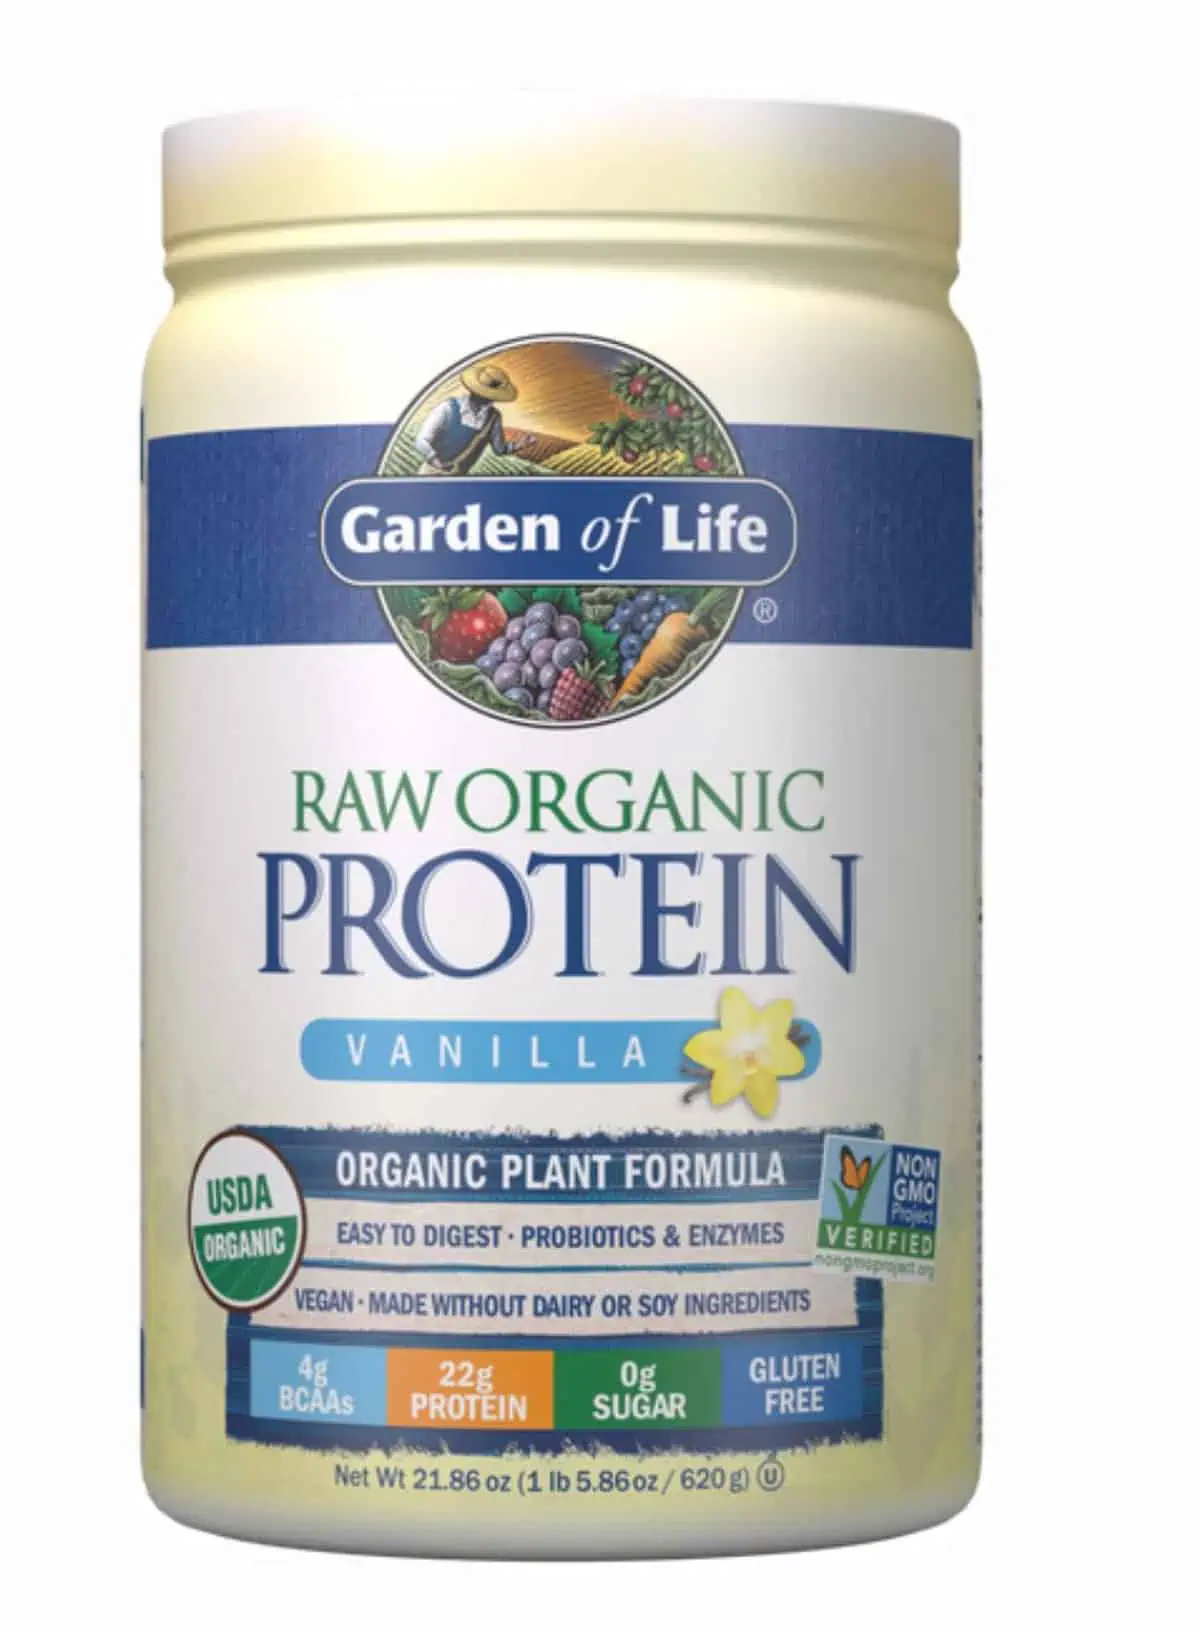 Garden of Life organic protein powder.